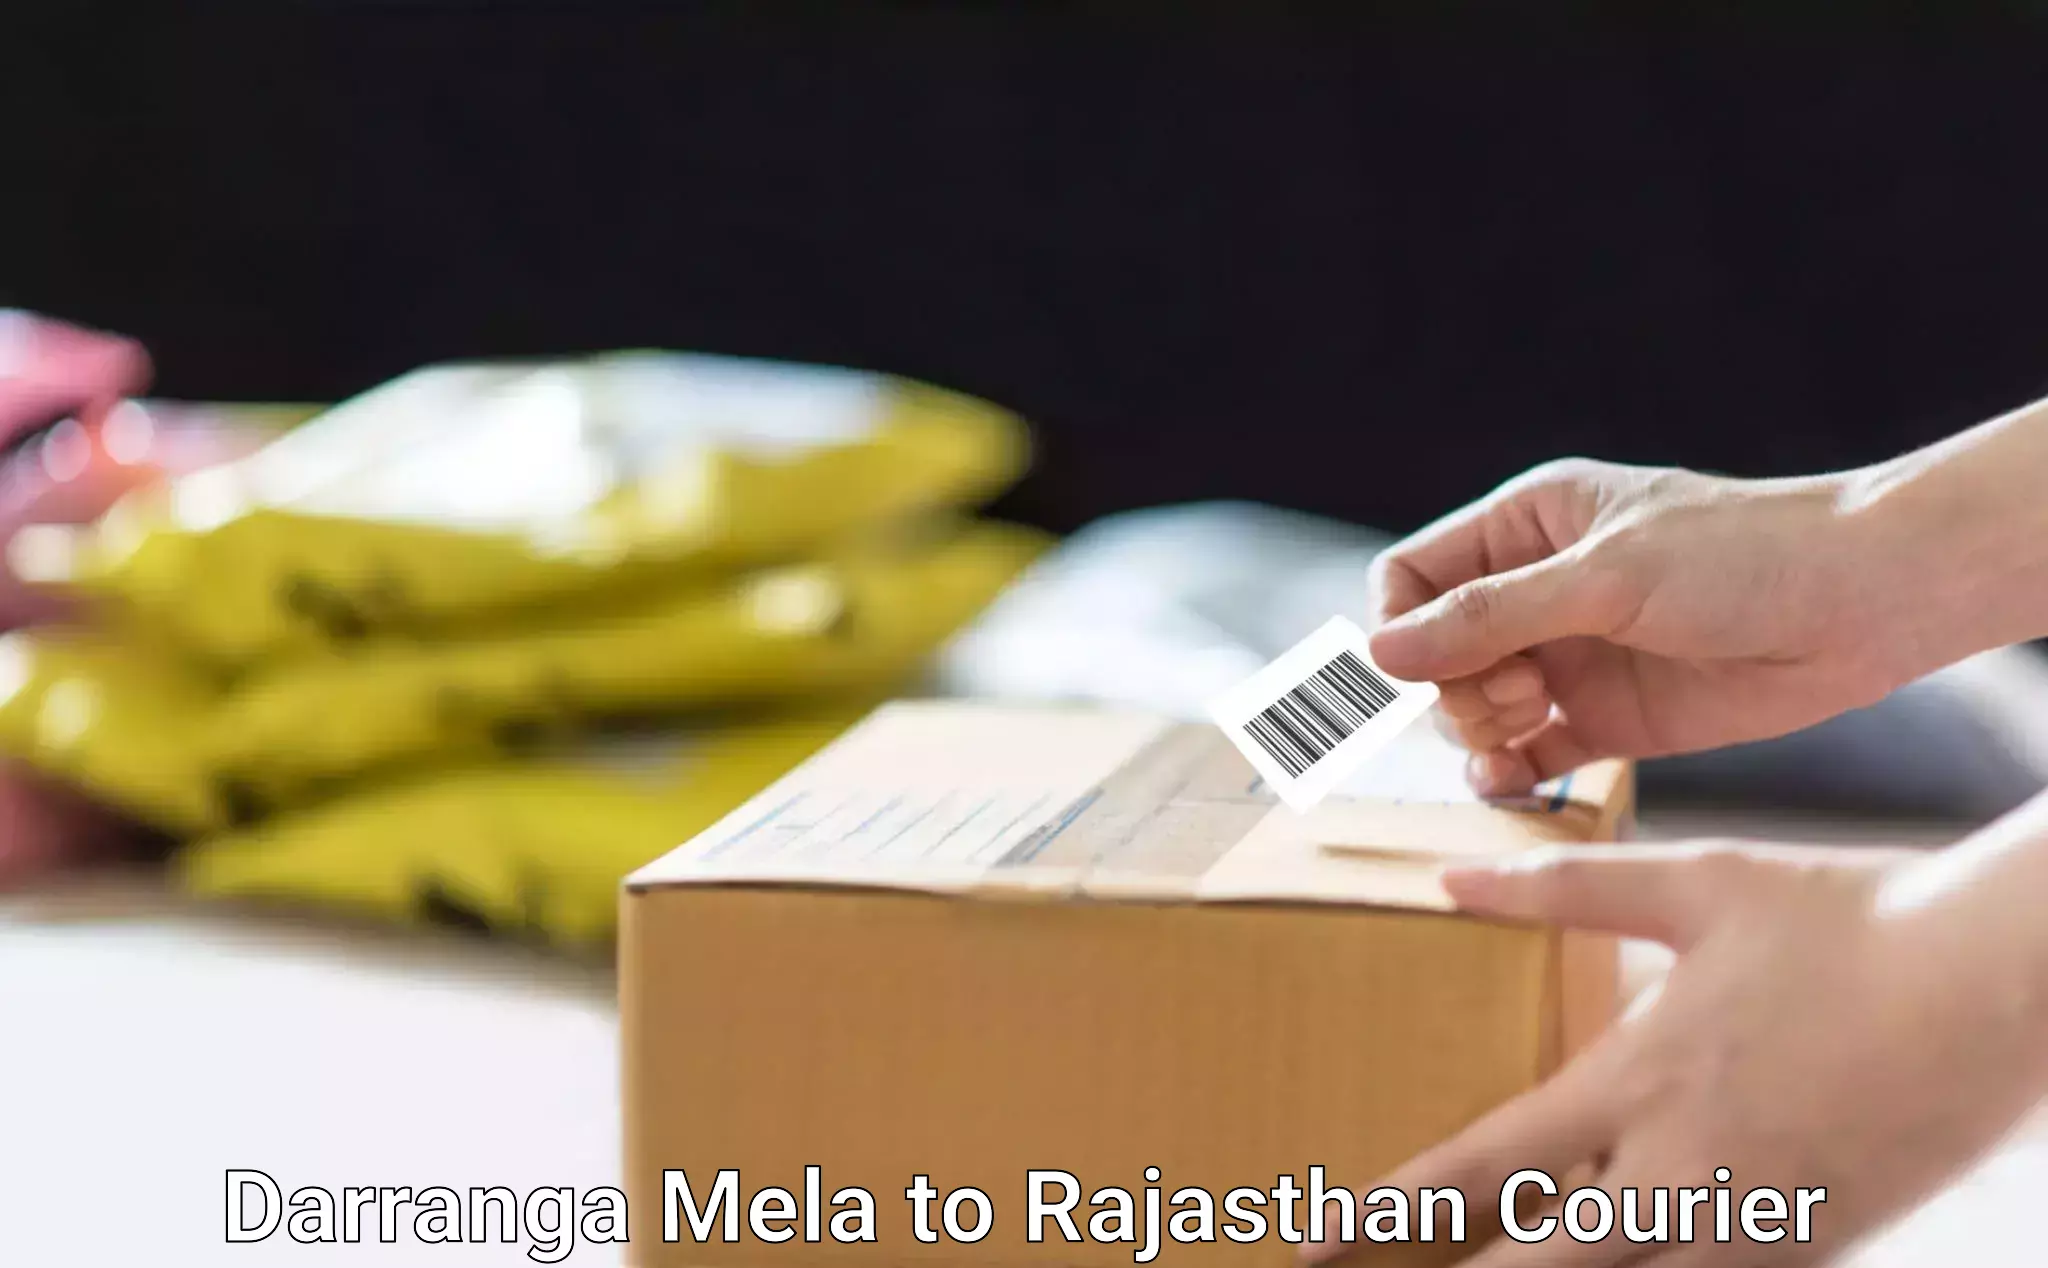 Courier service comparison Darranga Mela to Chittorgarh